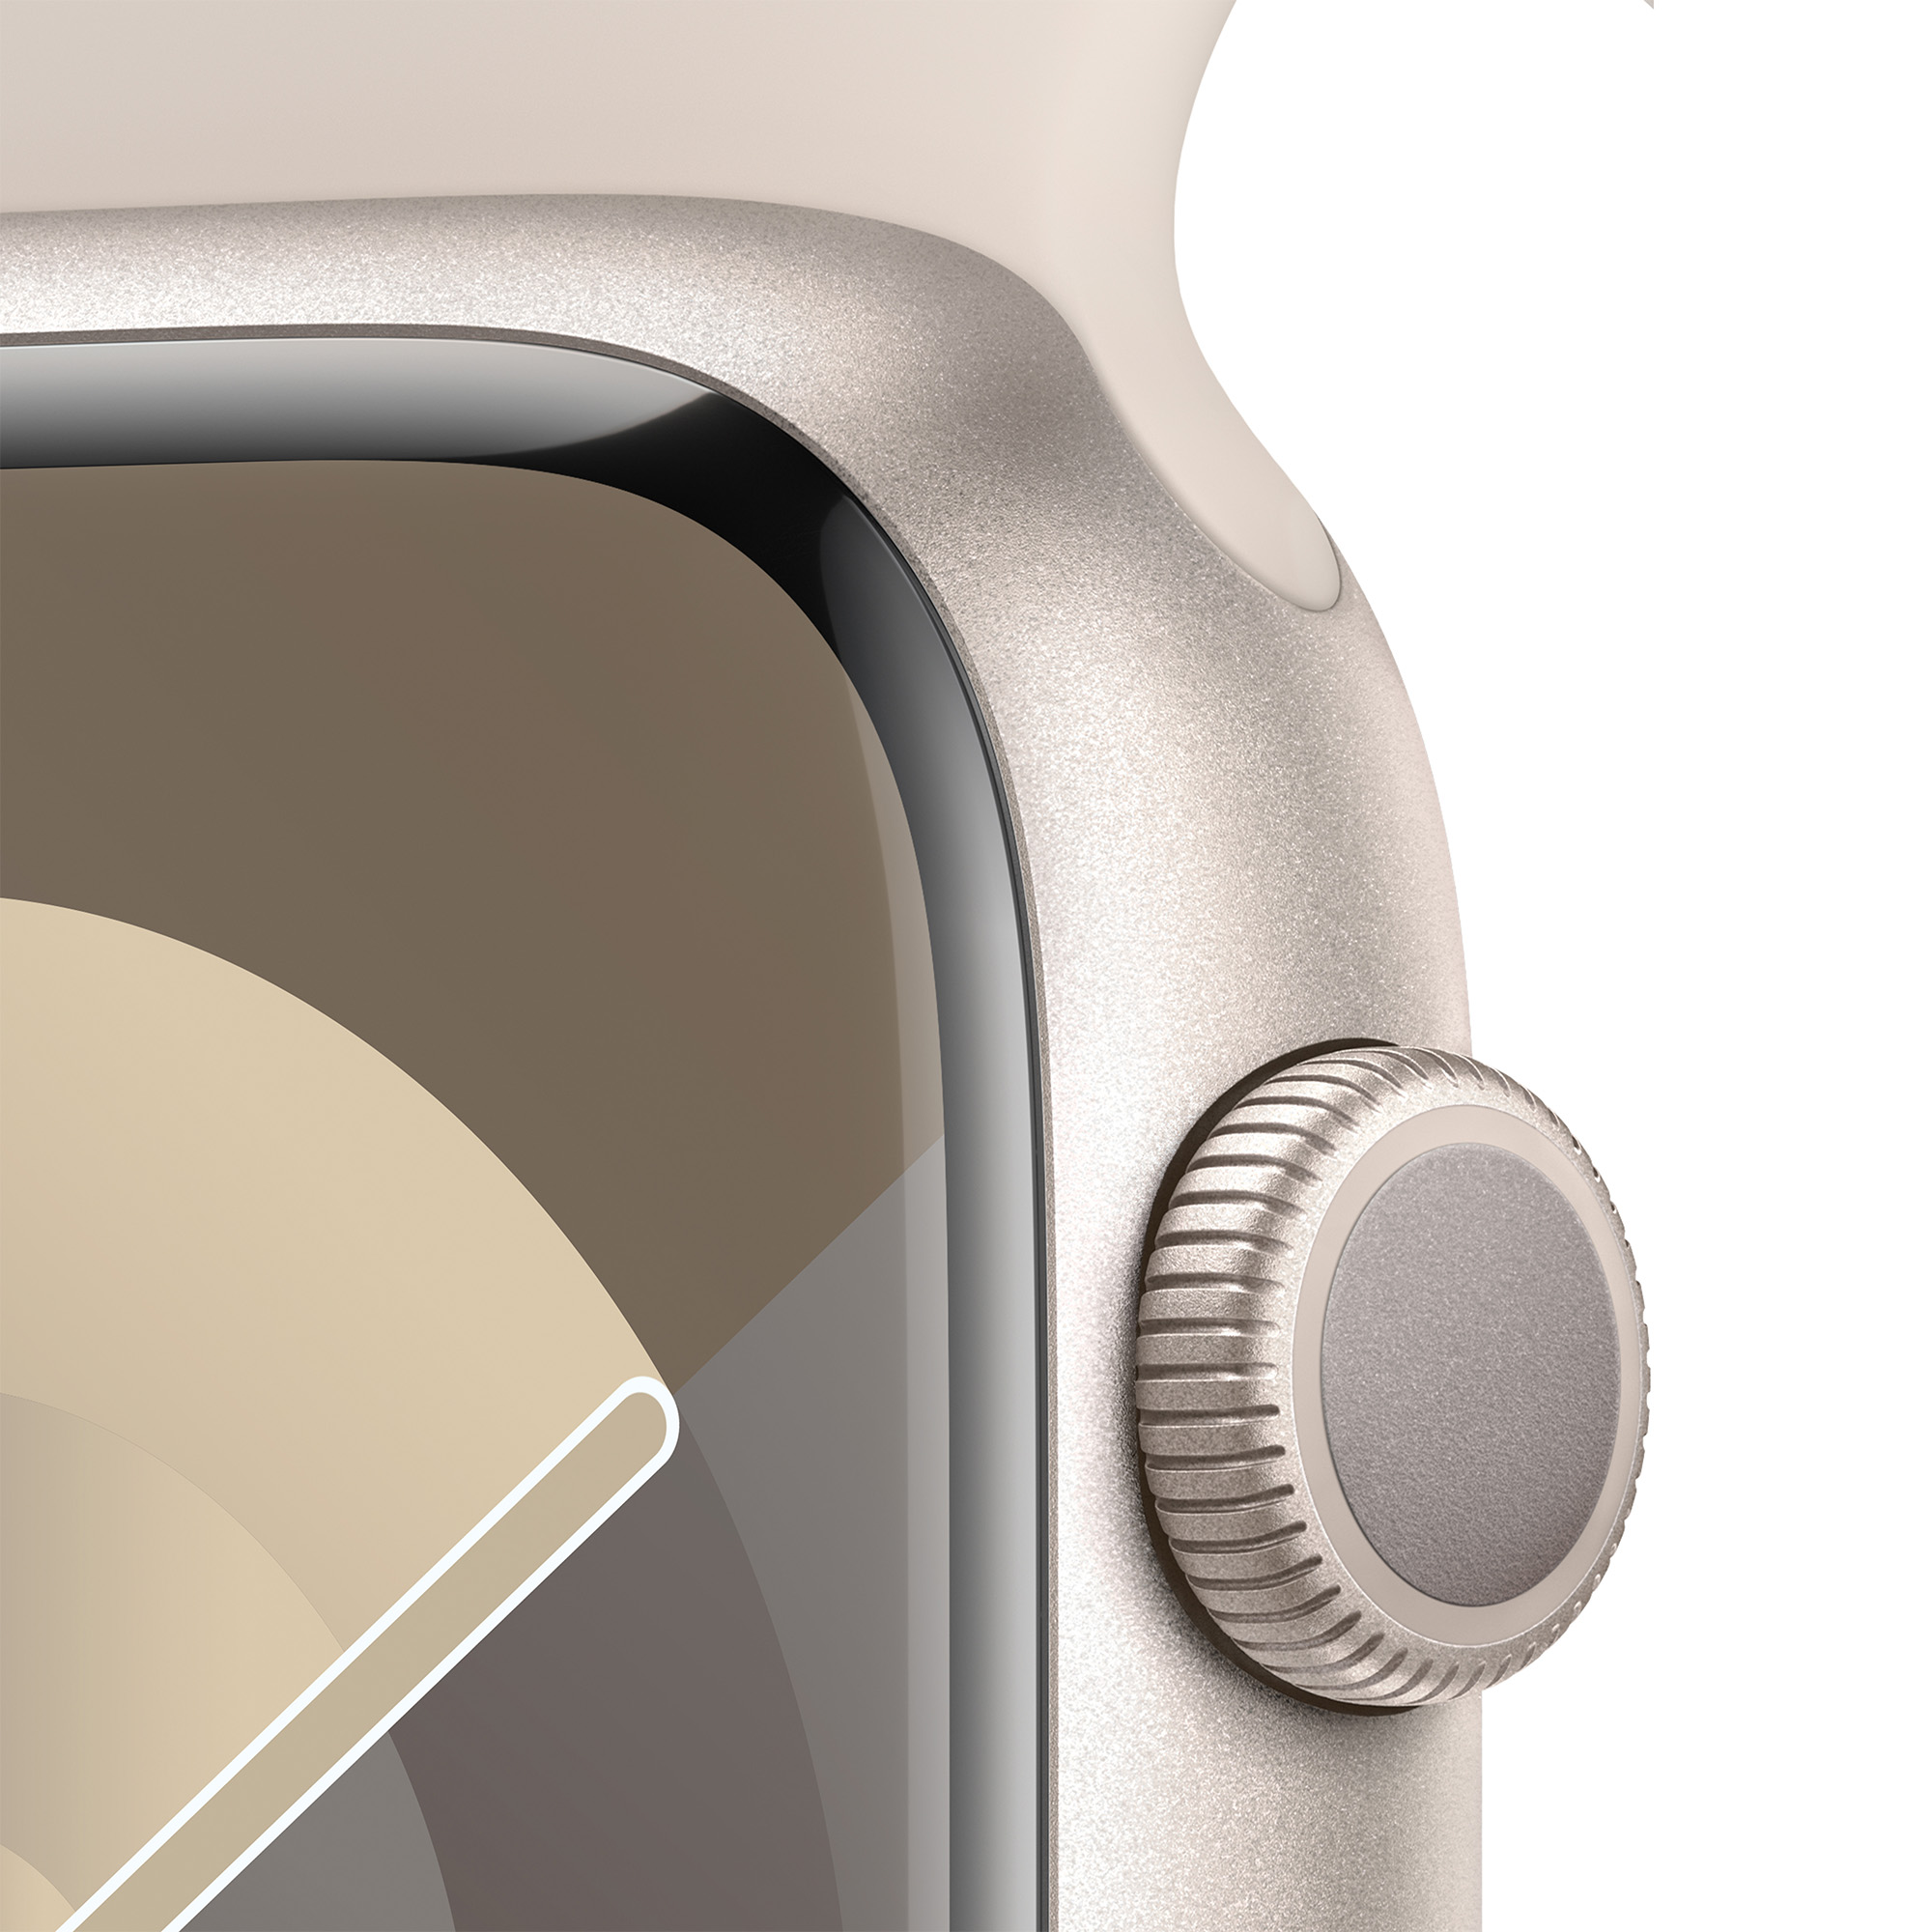 Apple Watch Series 9 GPS 45mm Starlight Aluminuimu Case with Starlight Sport Band - S/M